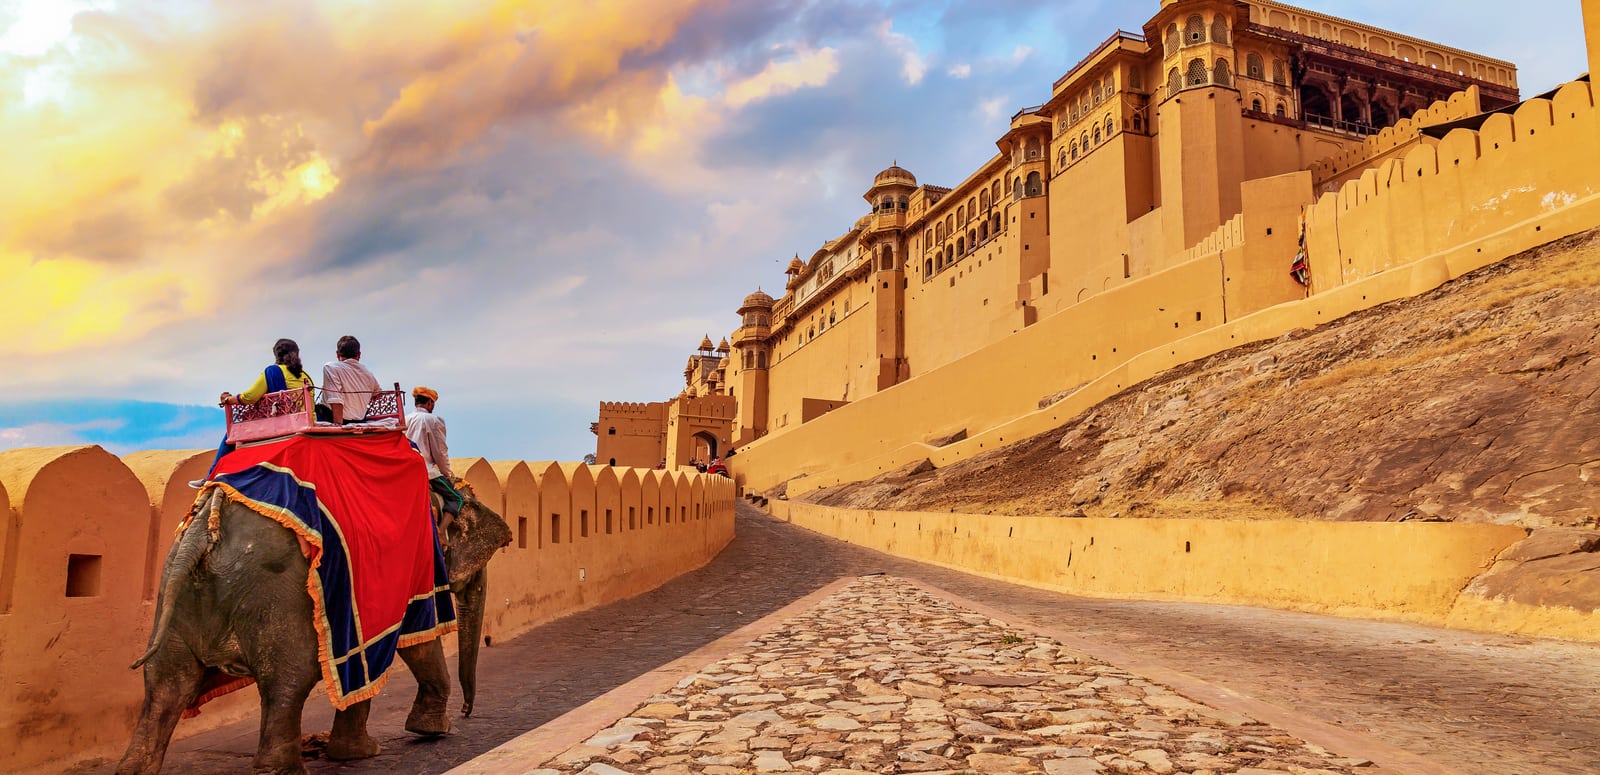 Jaipur – The city that makes golden triangle tour magnificent